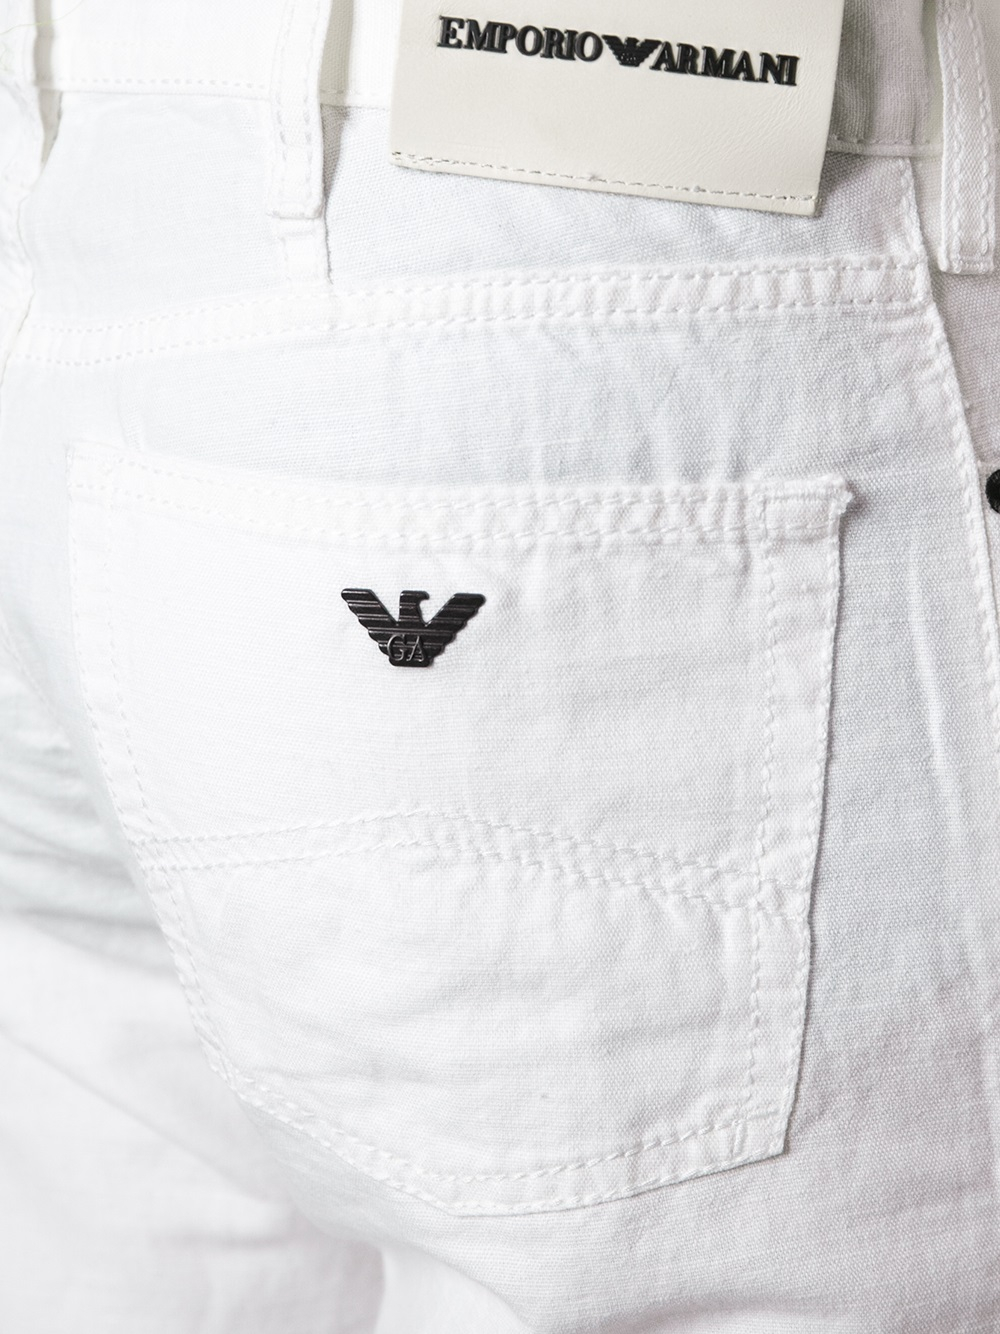 armani white jeans - 50% OFF 